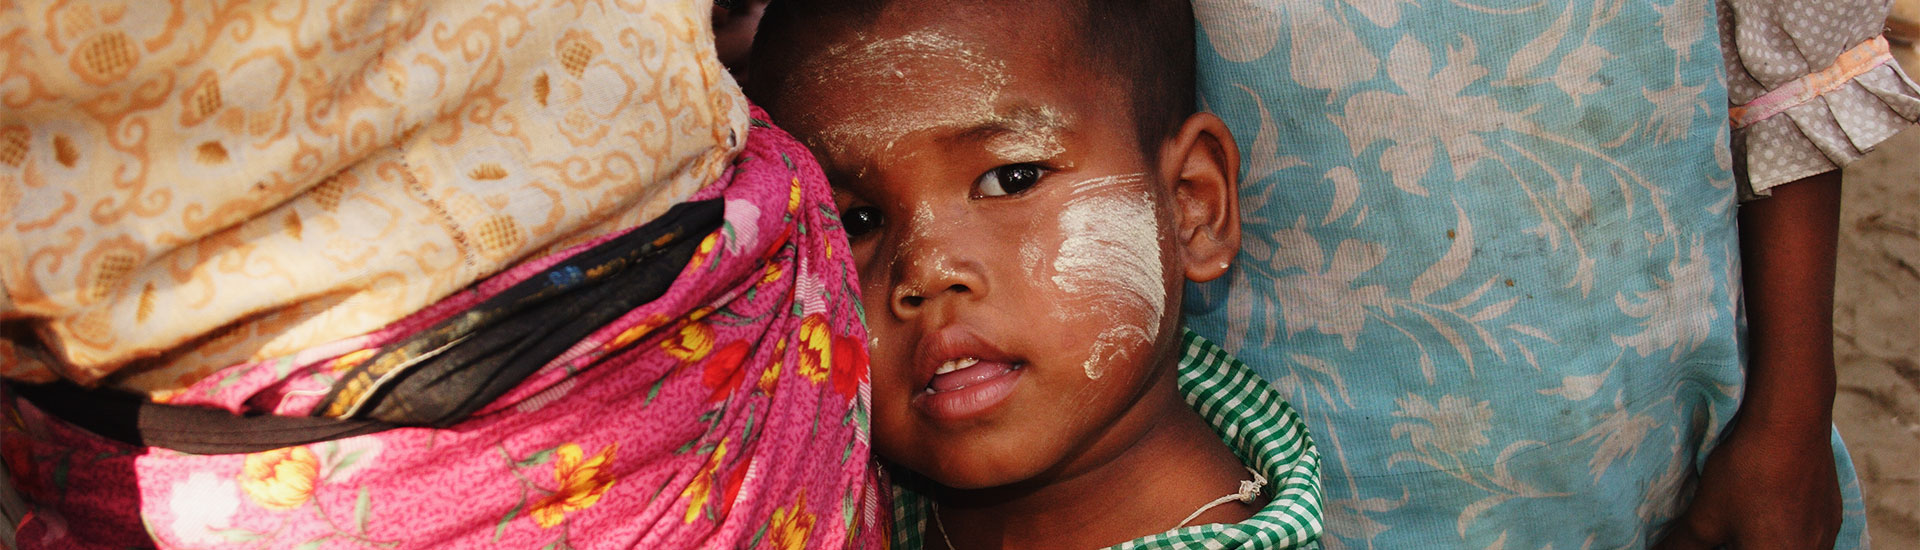 Child in Myanmar